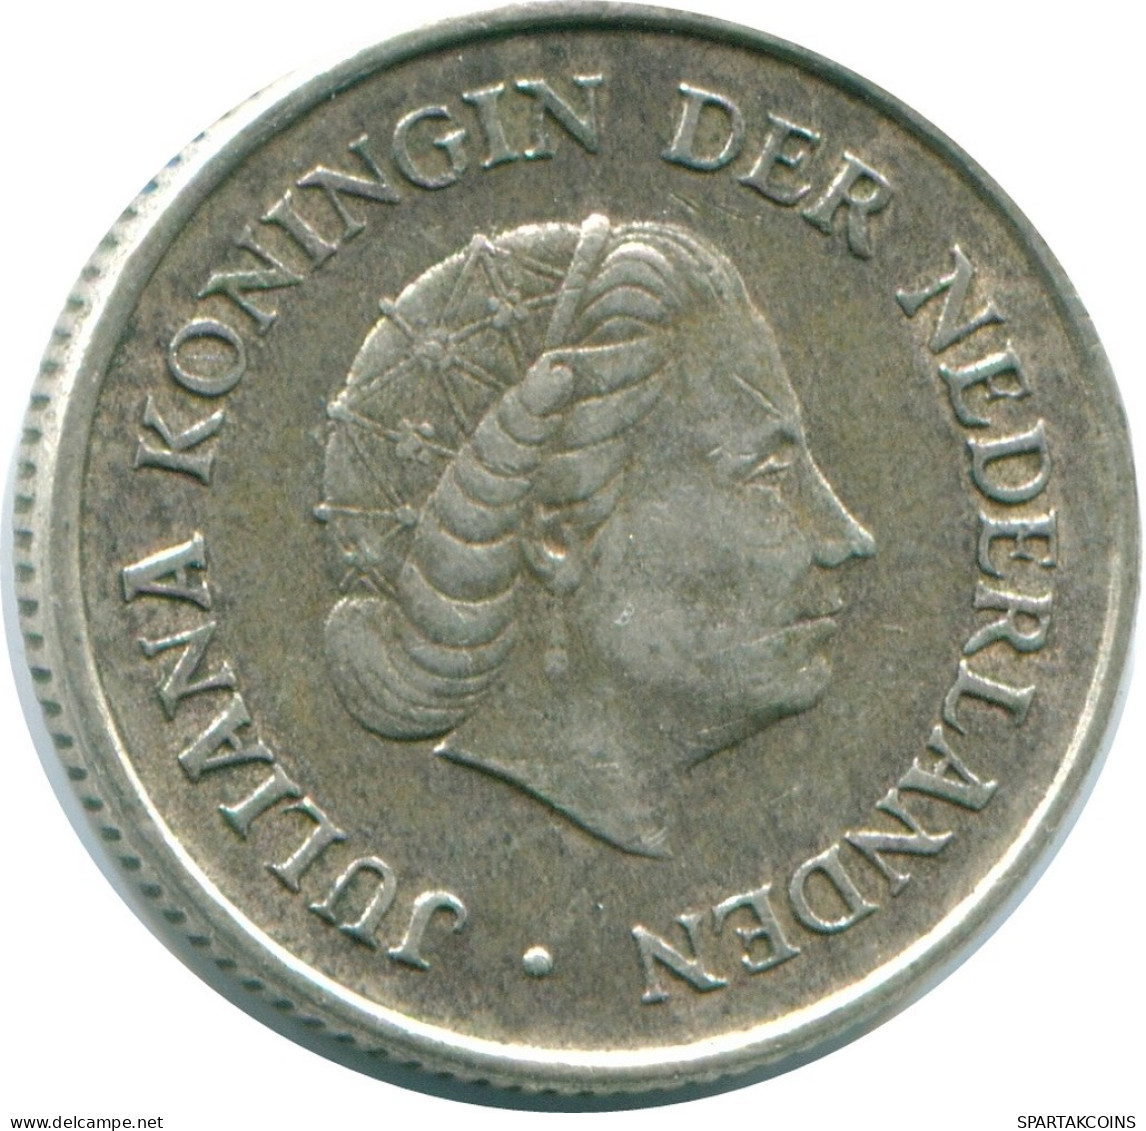 1/4 GULDEN 1970 NETHERLANDS ANTILLES SILVER Colonial Coin #NL11724.4.U.A - Niederländische Antillen